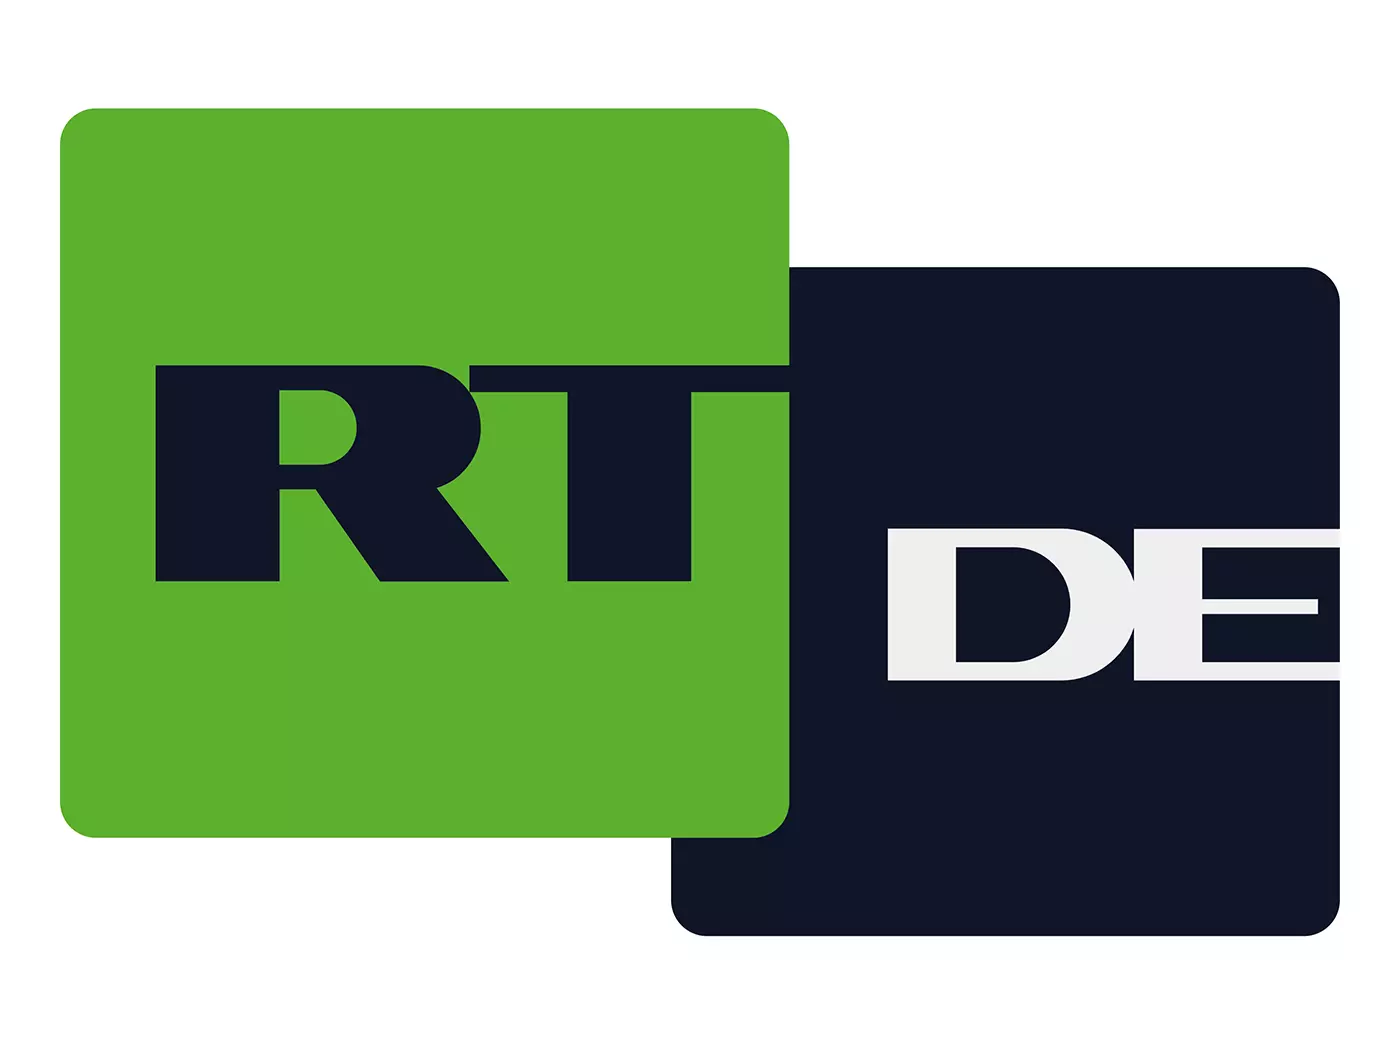 Д е сайт. RT логотип. Телеканал RT. Russia today Телеканал. Russia today логотип.